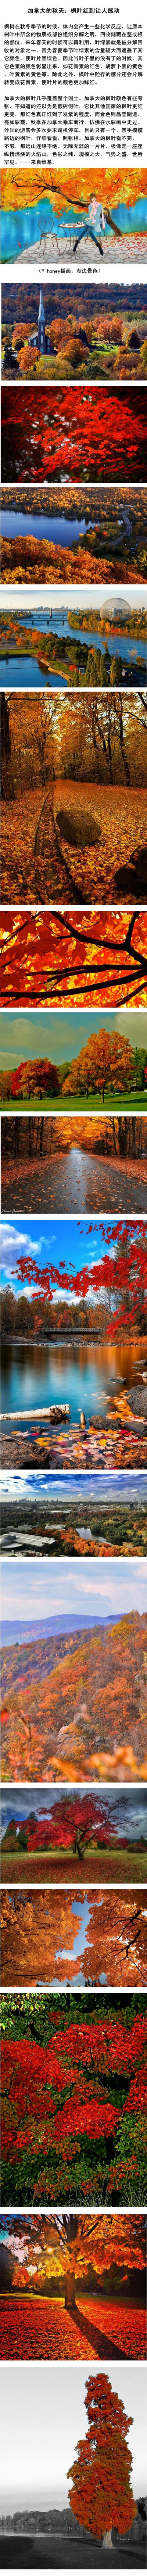 【Y honey旅行时尚手袋分享2】加拿大的秋天；枫叶红到让人感动